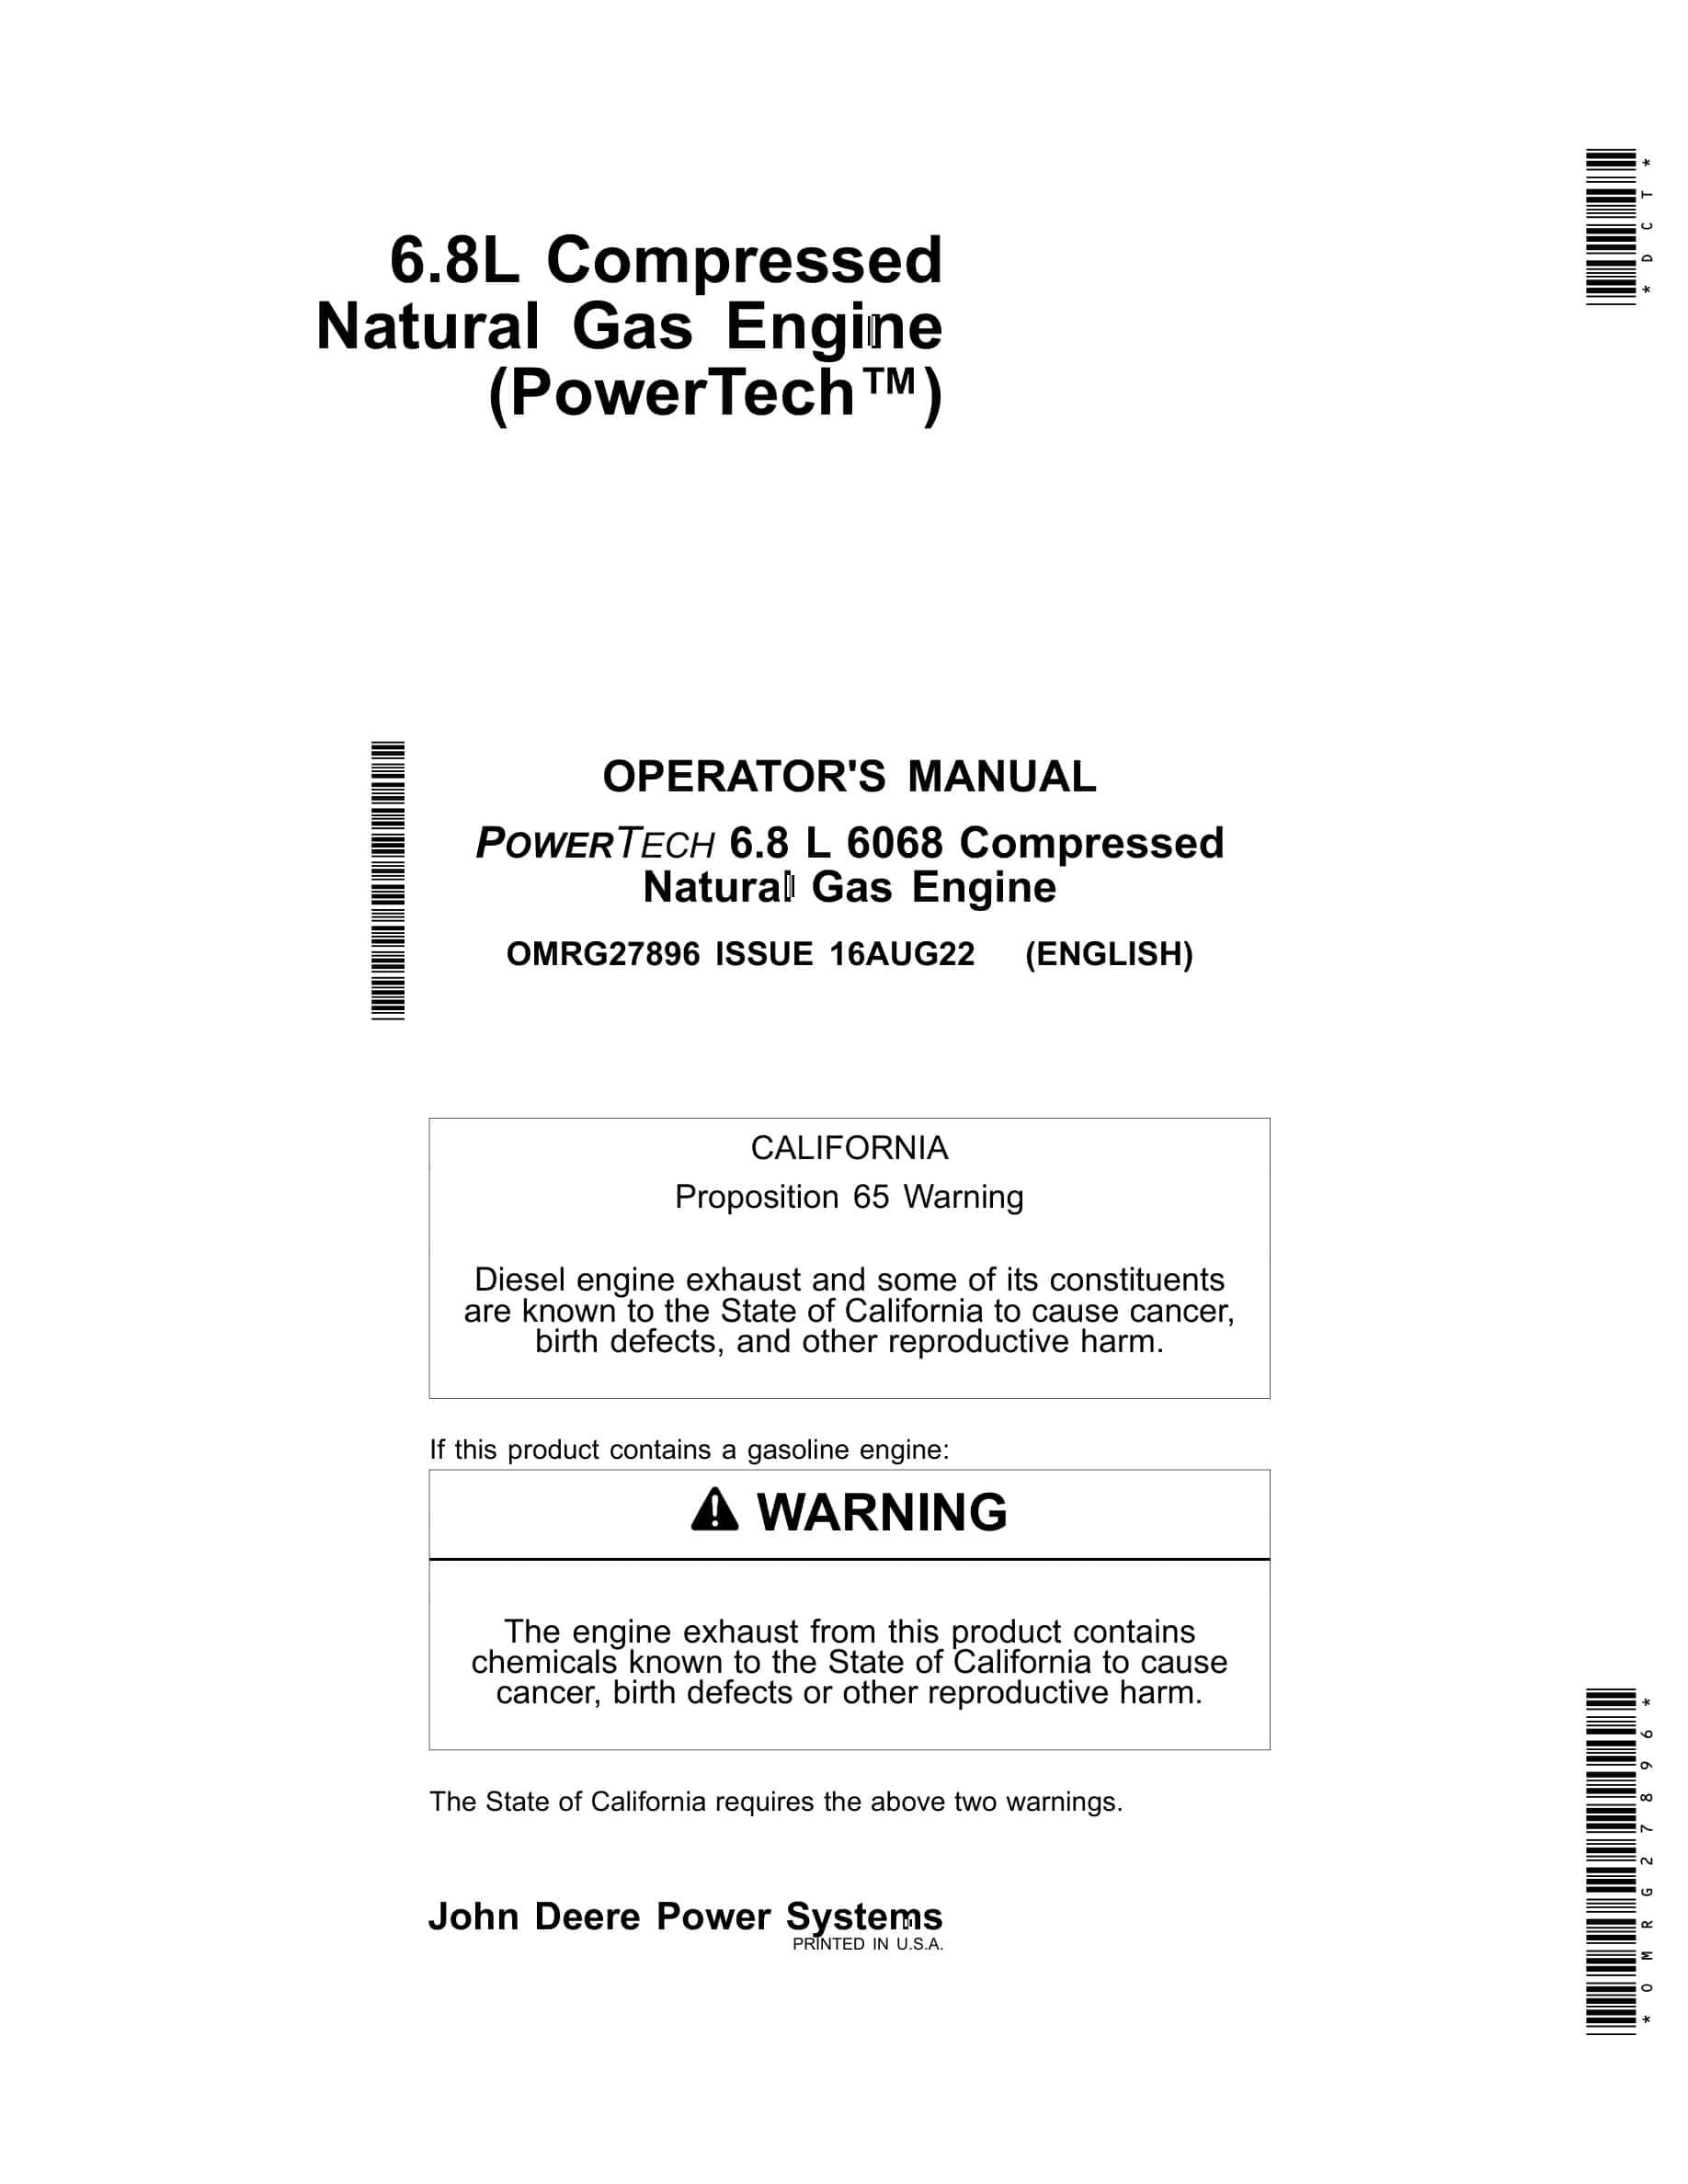 John Deere PowerTech 6.8 L 6068 Compressed Natural Gas Engine Operator Manual OMRG27896-1